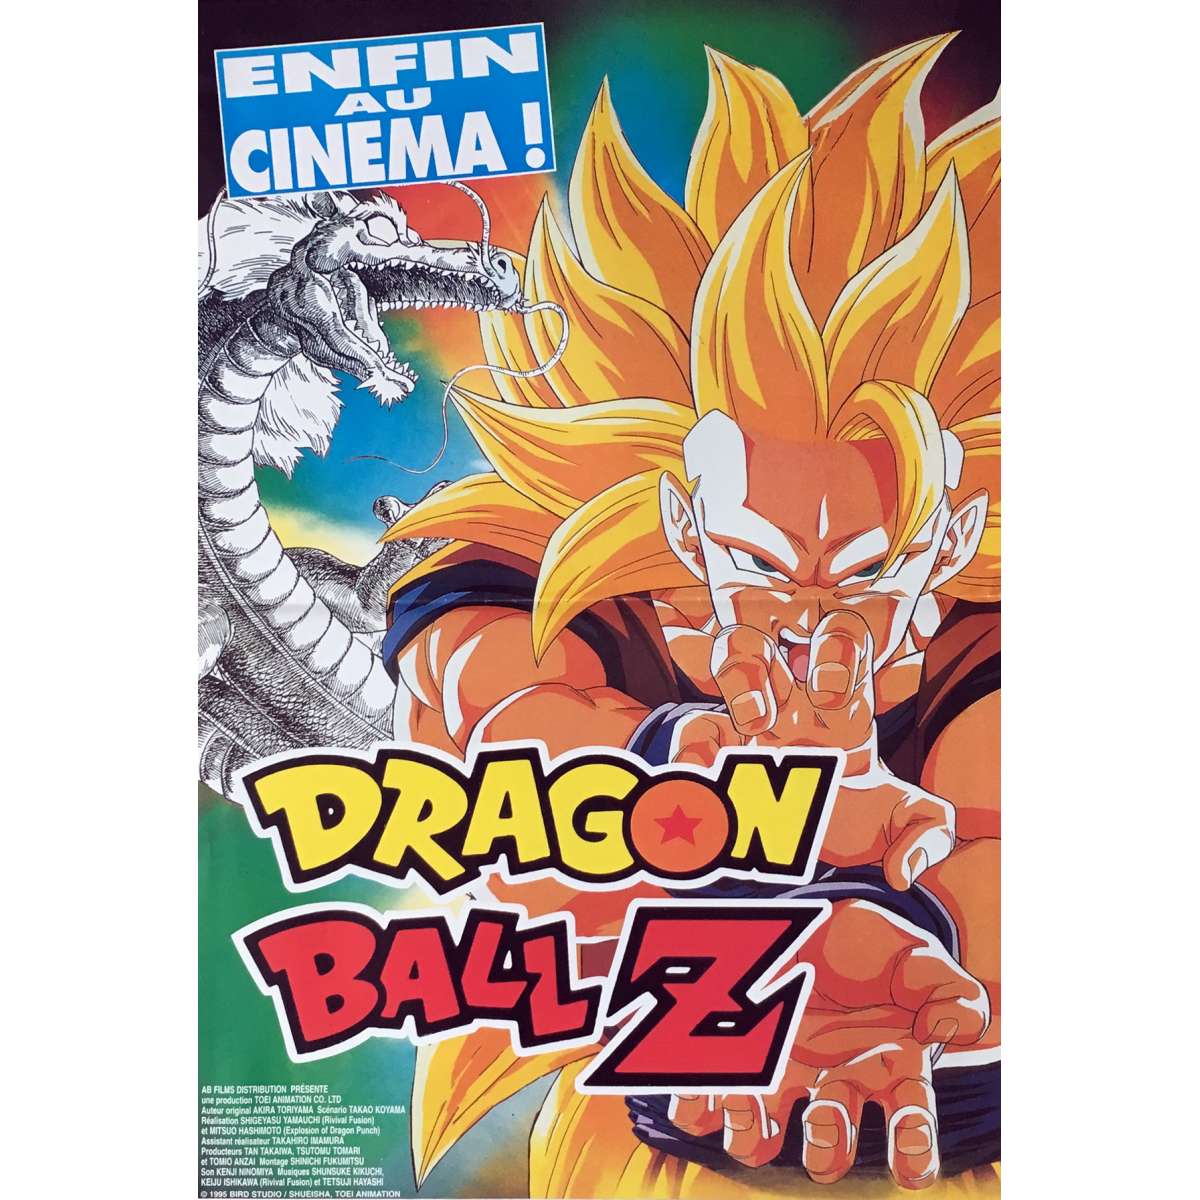 DRAGON BALL Z Saga Freeza Akira Toriyama Episodes 65-72 2 X DVD